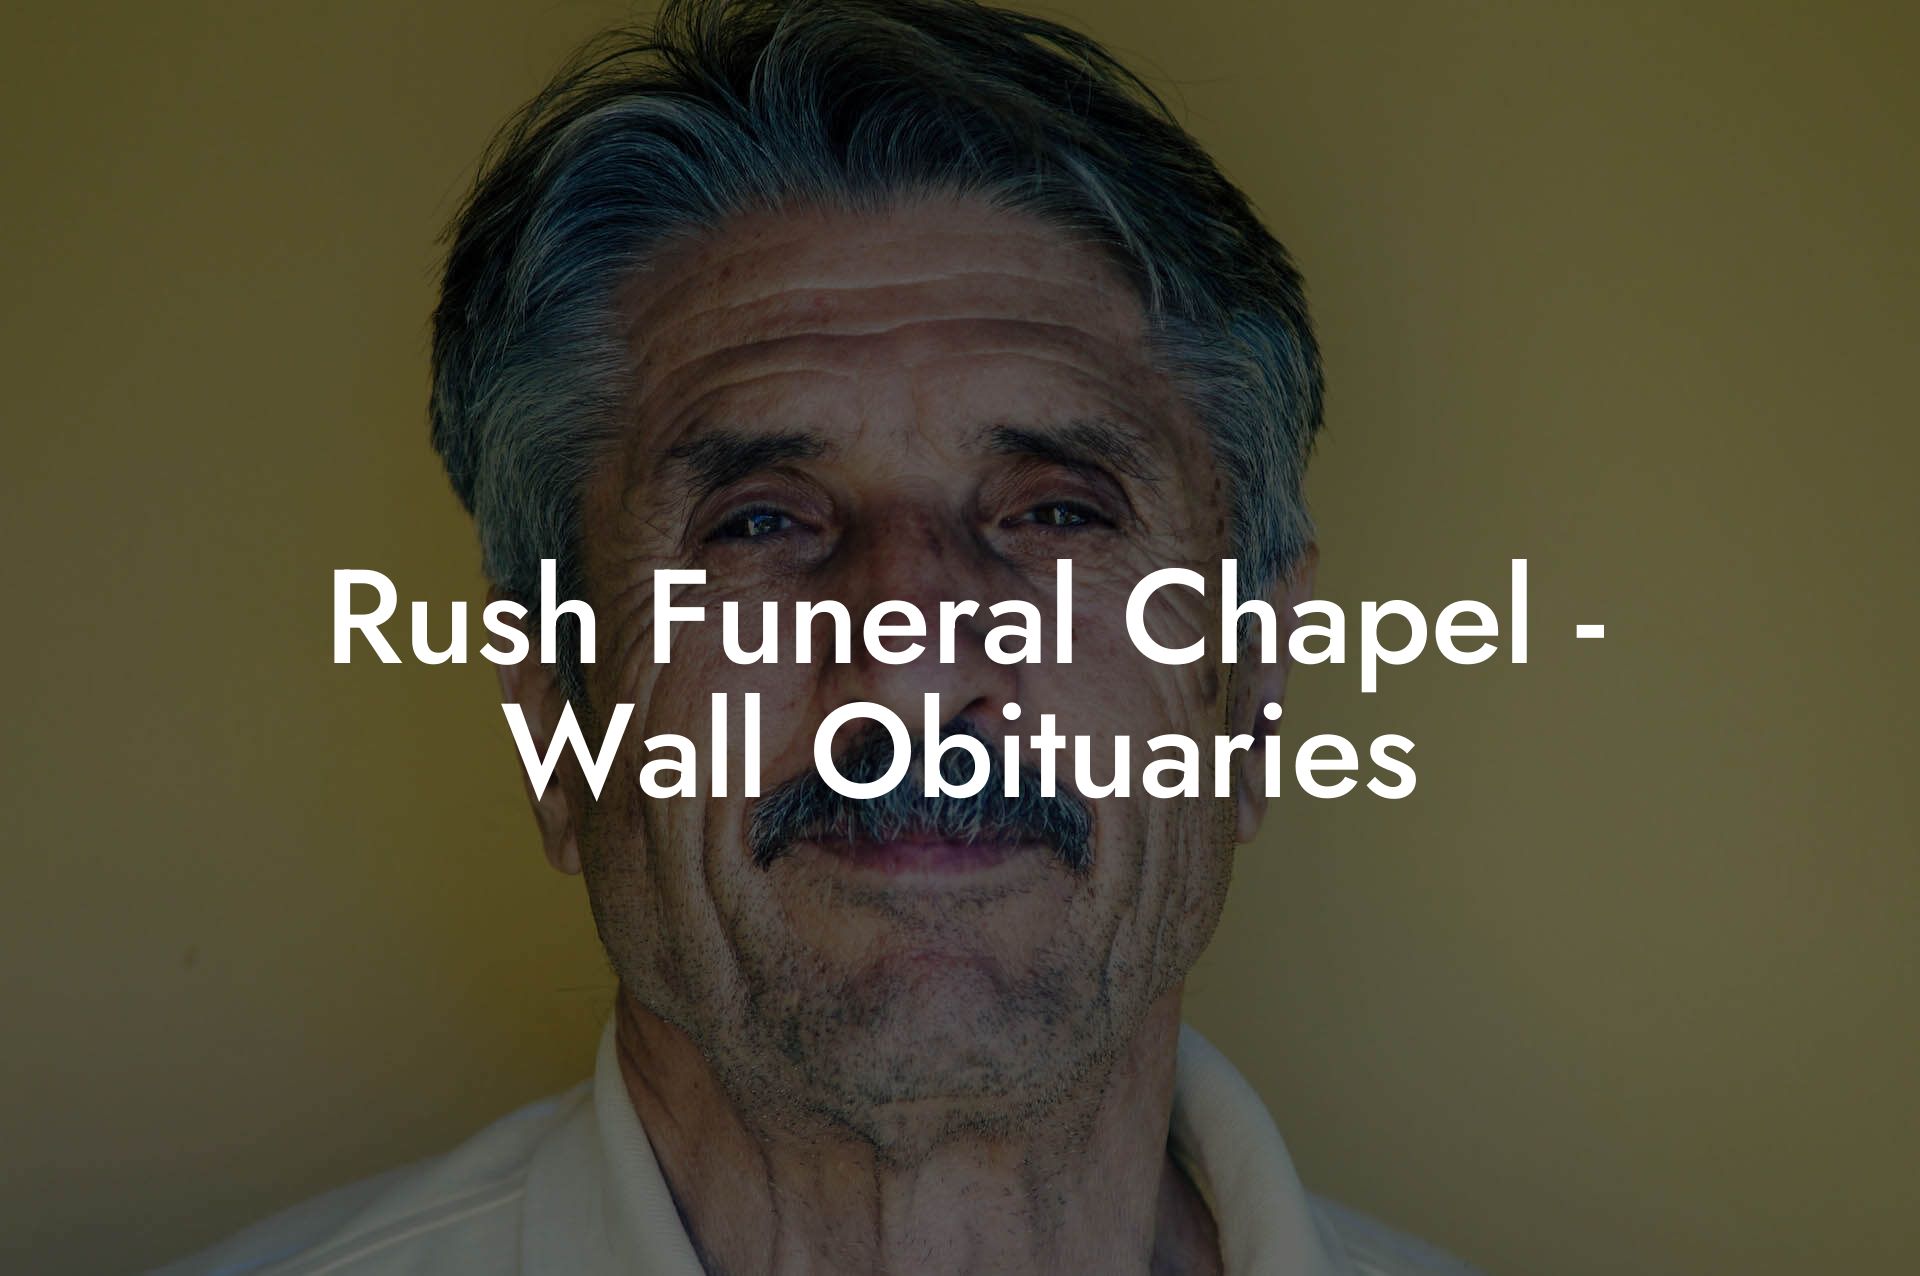 Rush Funeral Chapel - Wall Obituaries